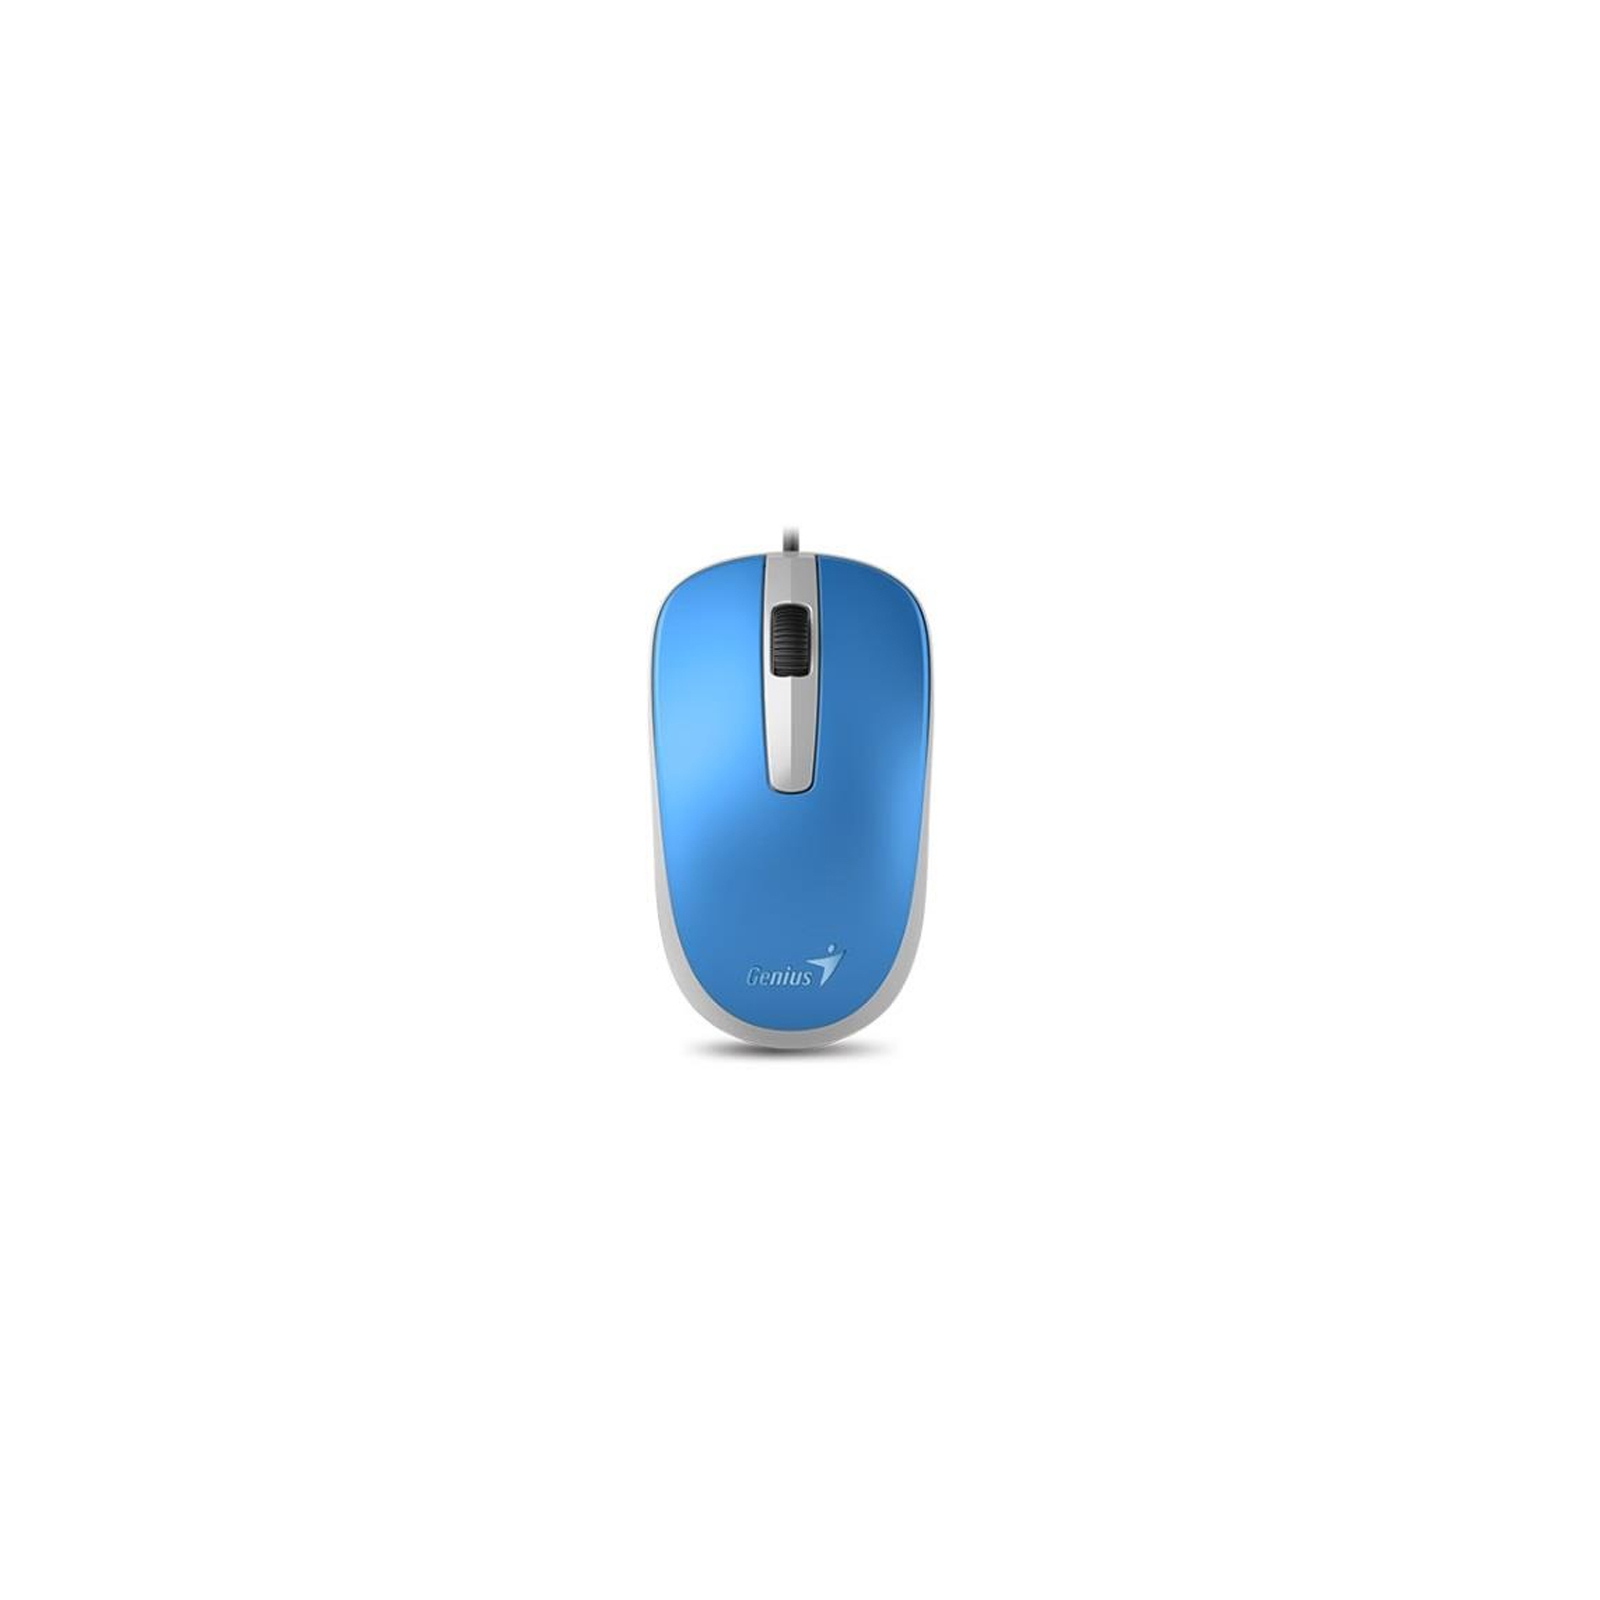 Мышка Genius DX-120 USB White (31010105102) изображение 2